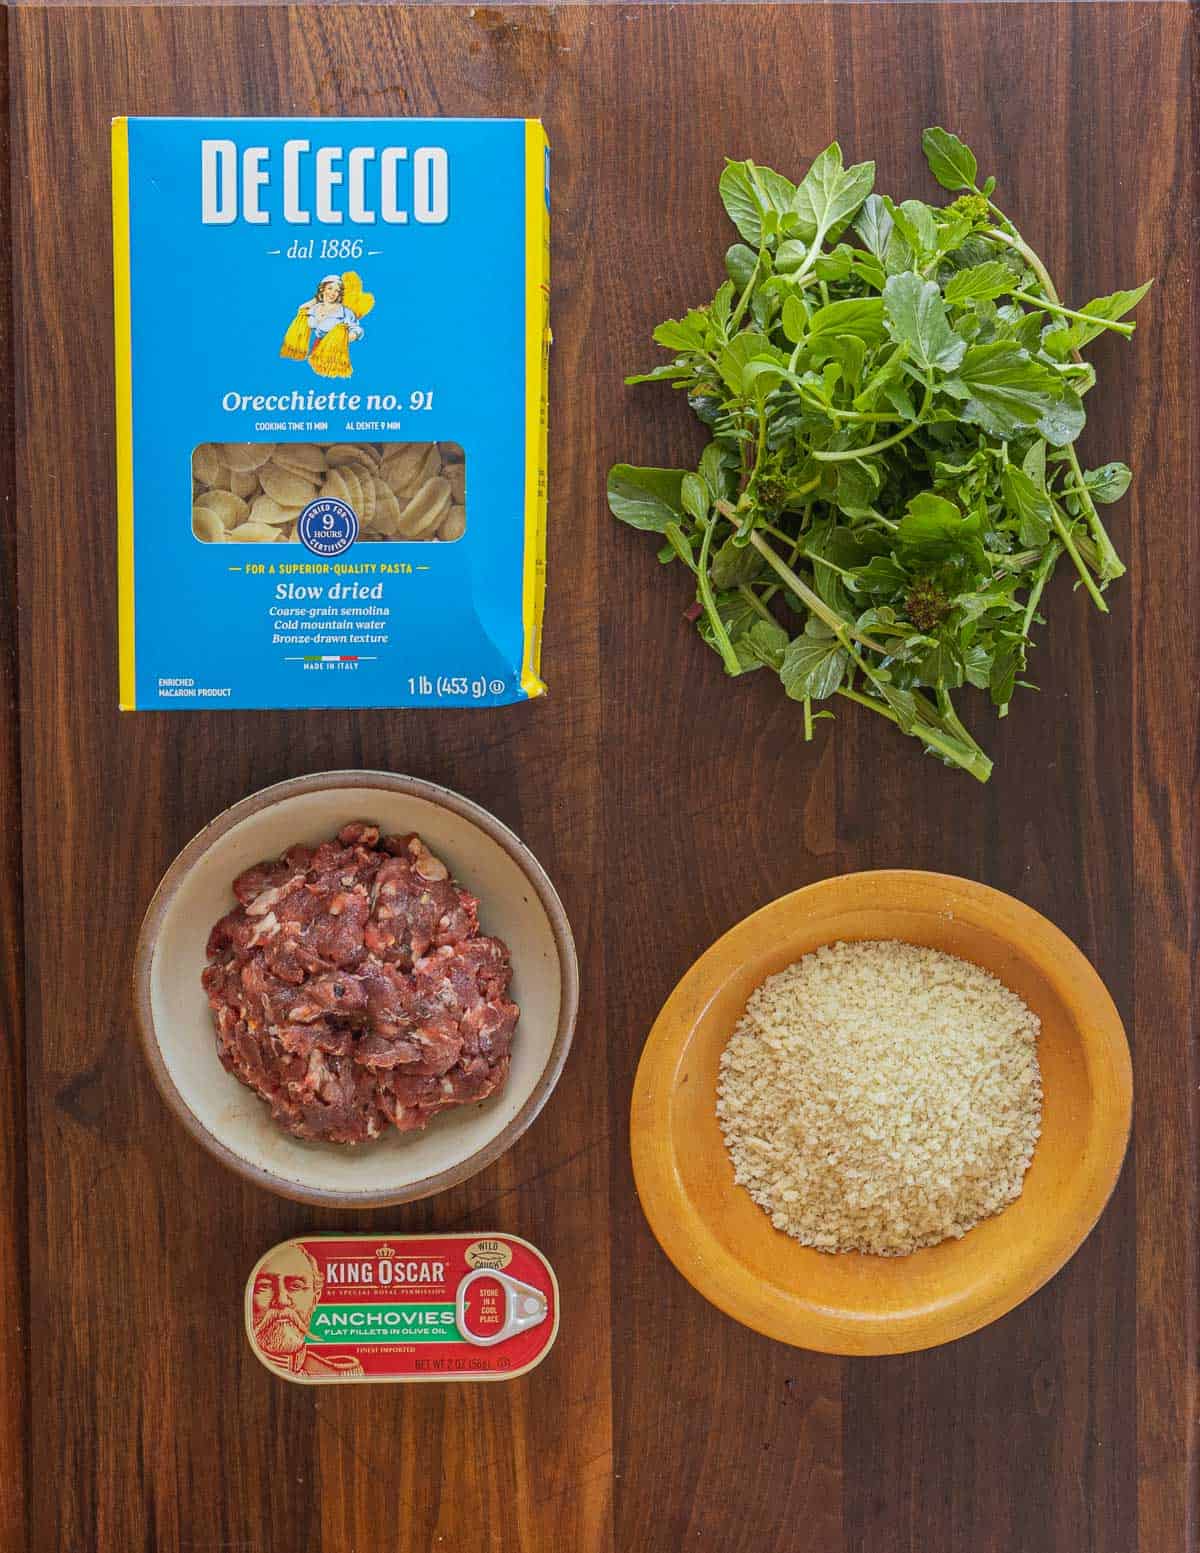 Orechiette alla barese ingredients: pasta, rapini, sausage, panko breadcrumbs, anchovy.